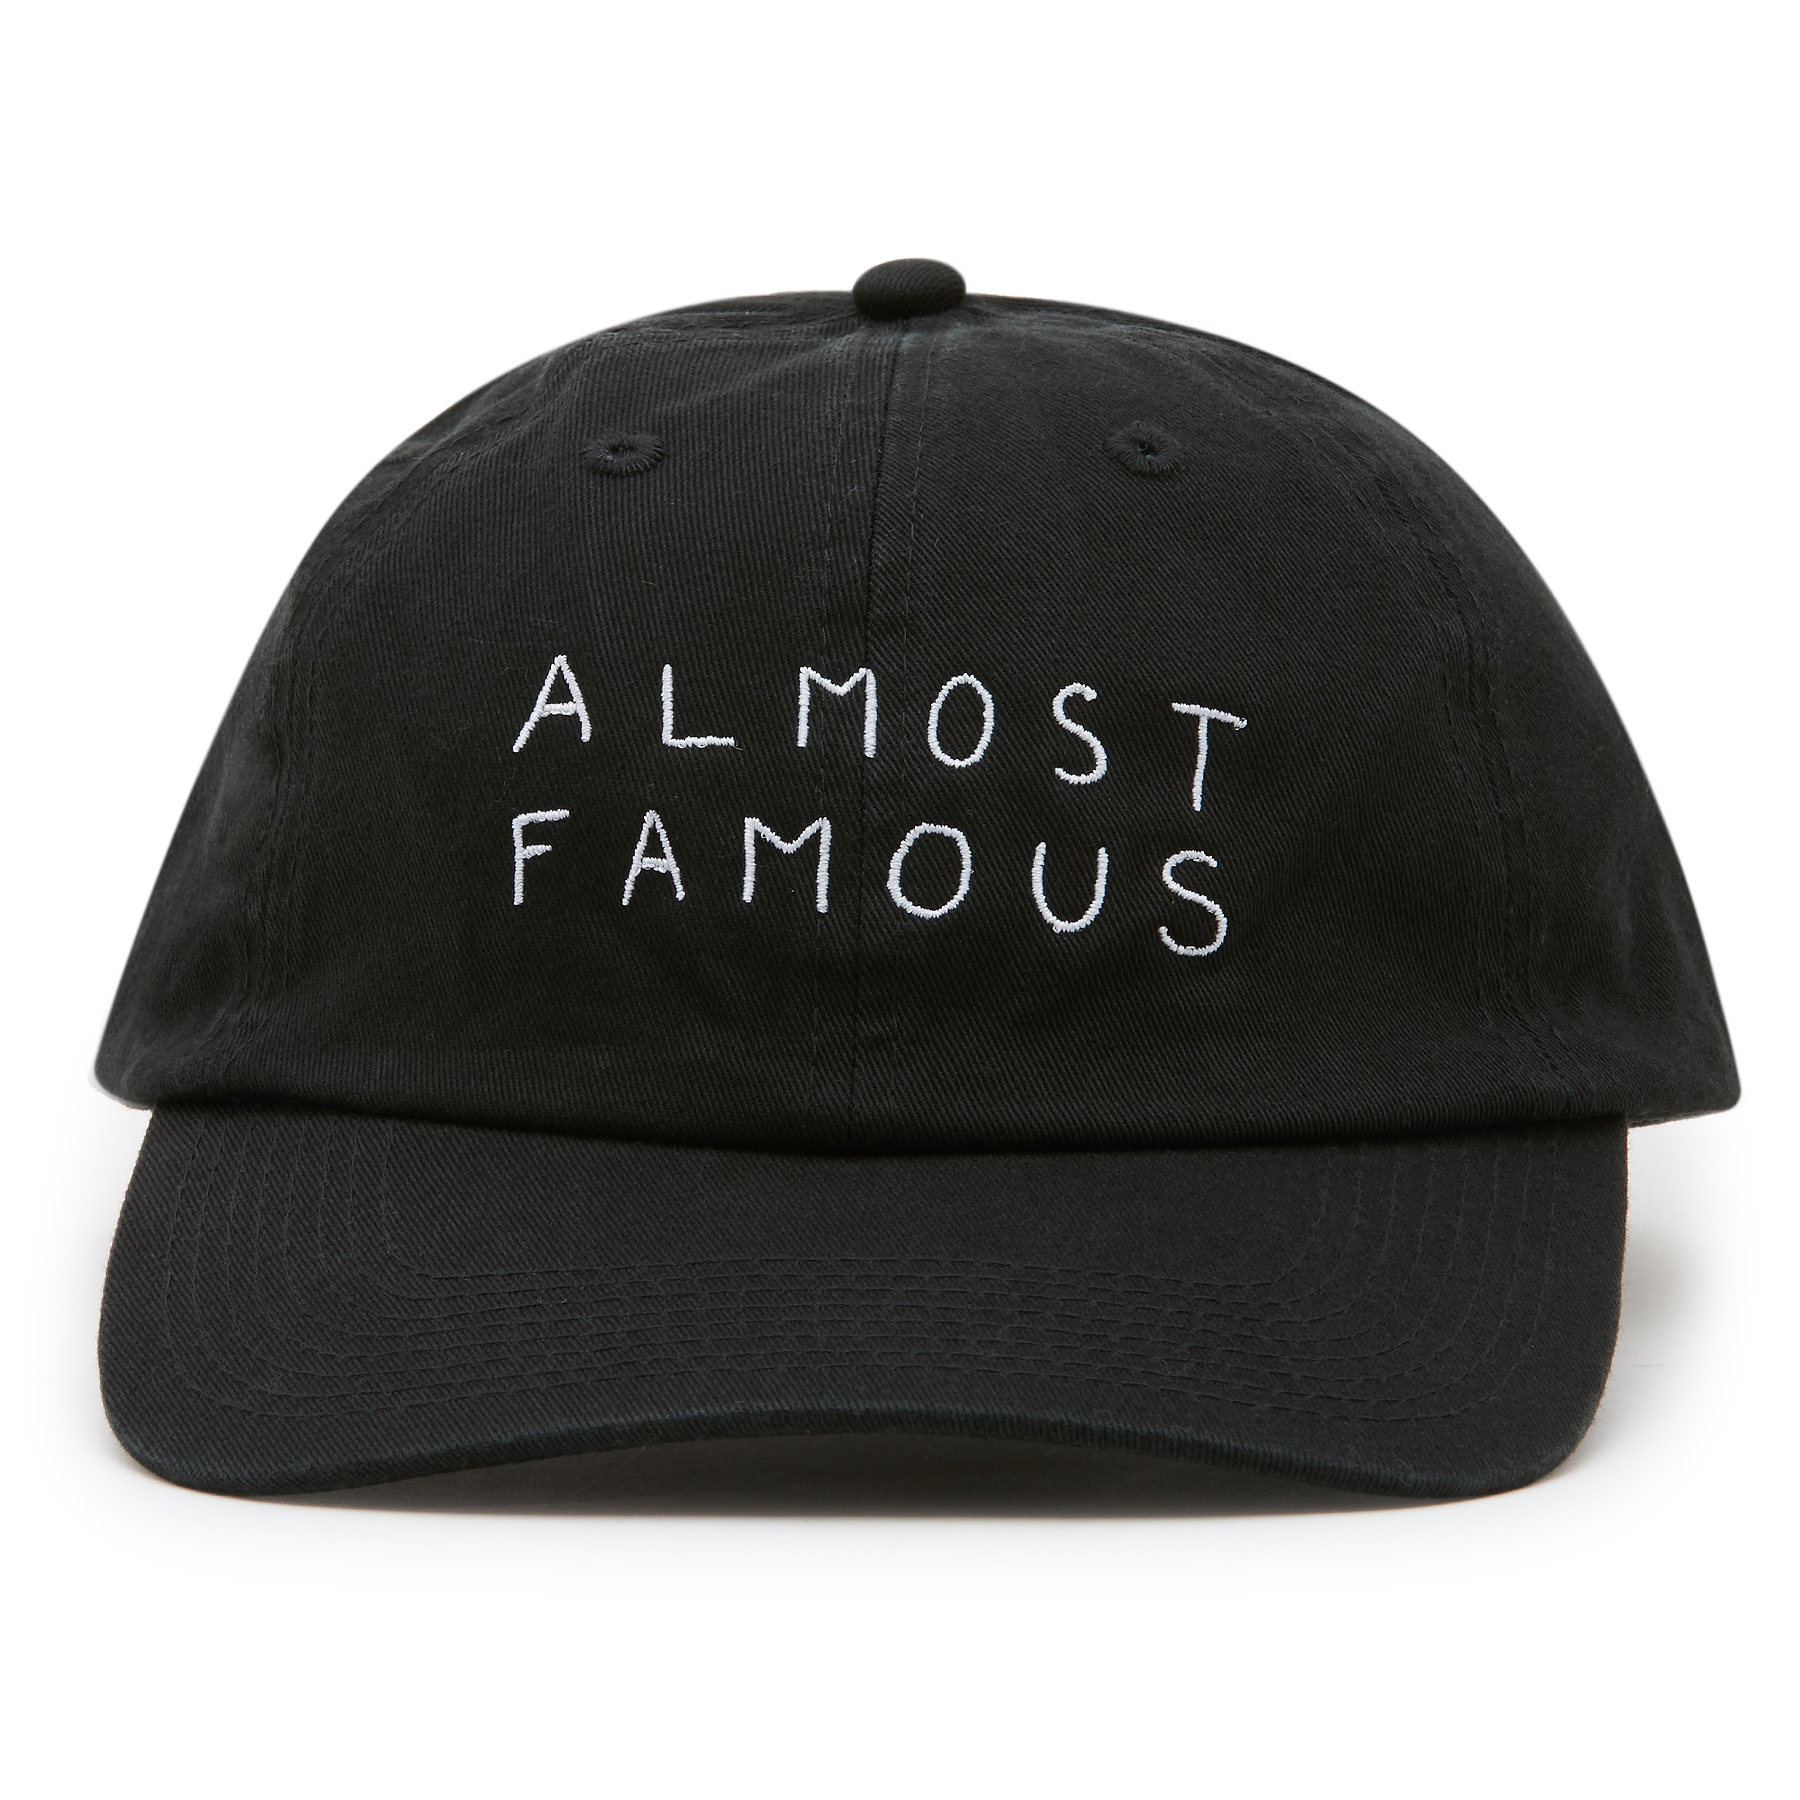 Almost Famous cap